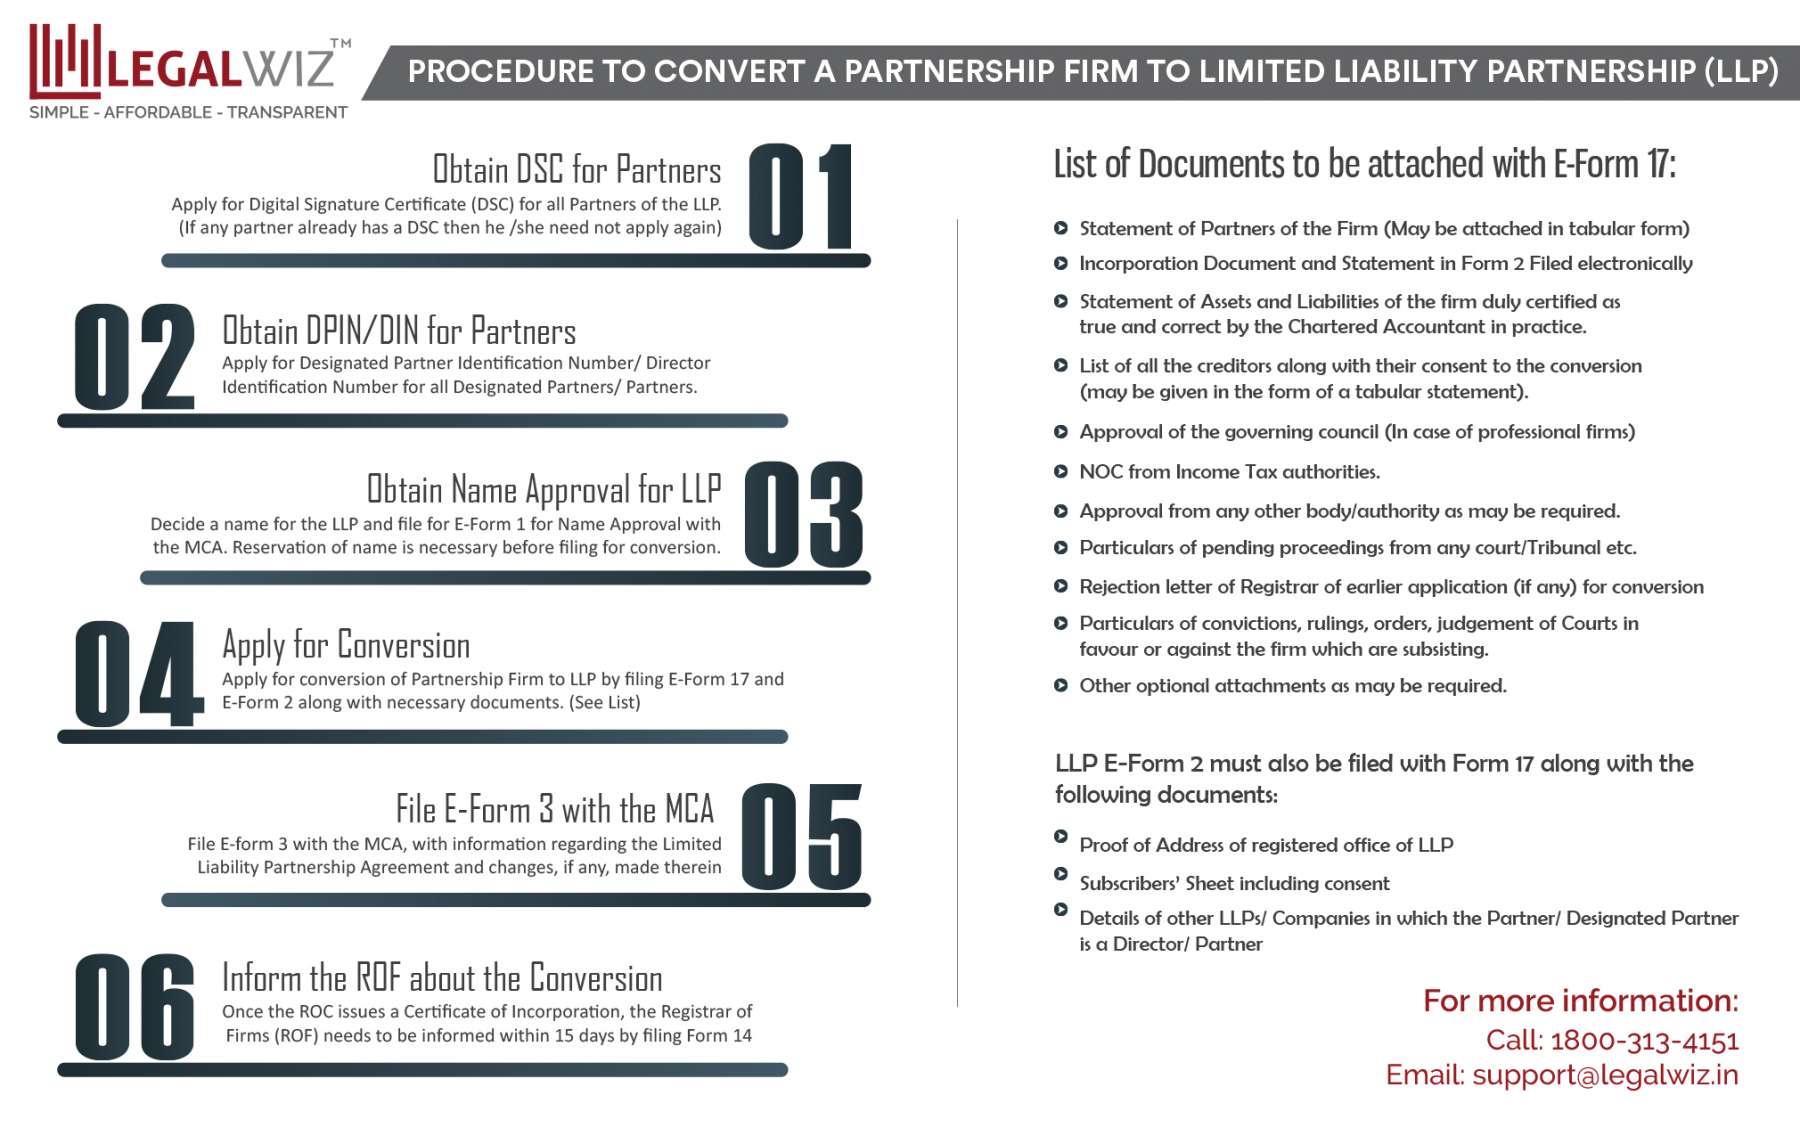 infographic_convert-partnership-to-llp_e5_ffr03_26